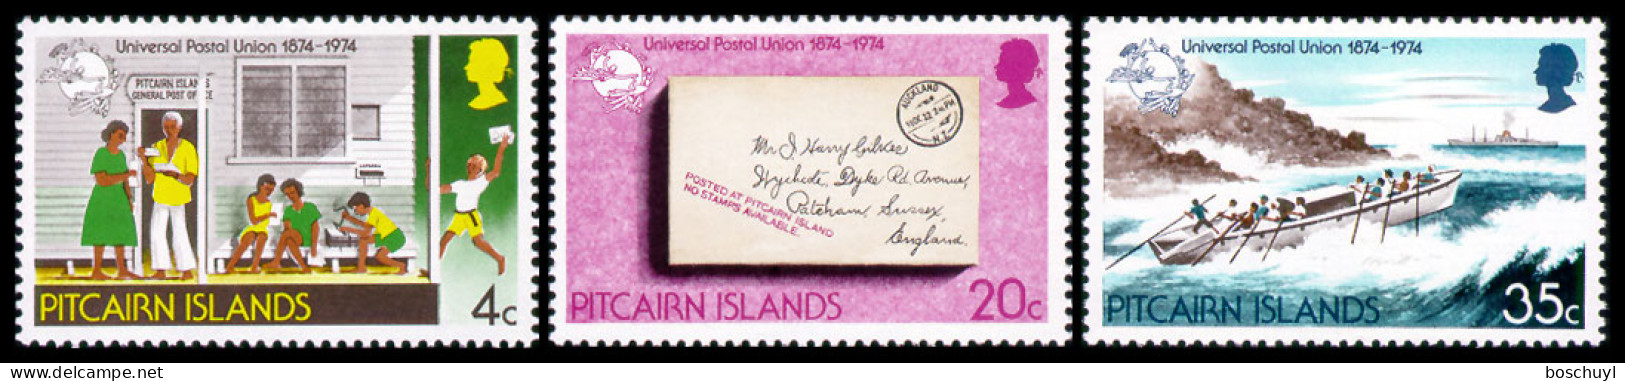 Pitcairn, 1974, UPU, Universal Postal Union, United Nations, MNH, Michel 141-143 - Pitcairn